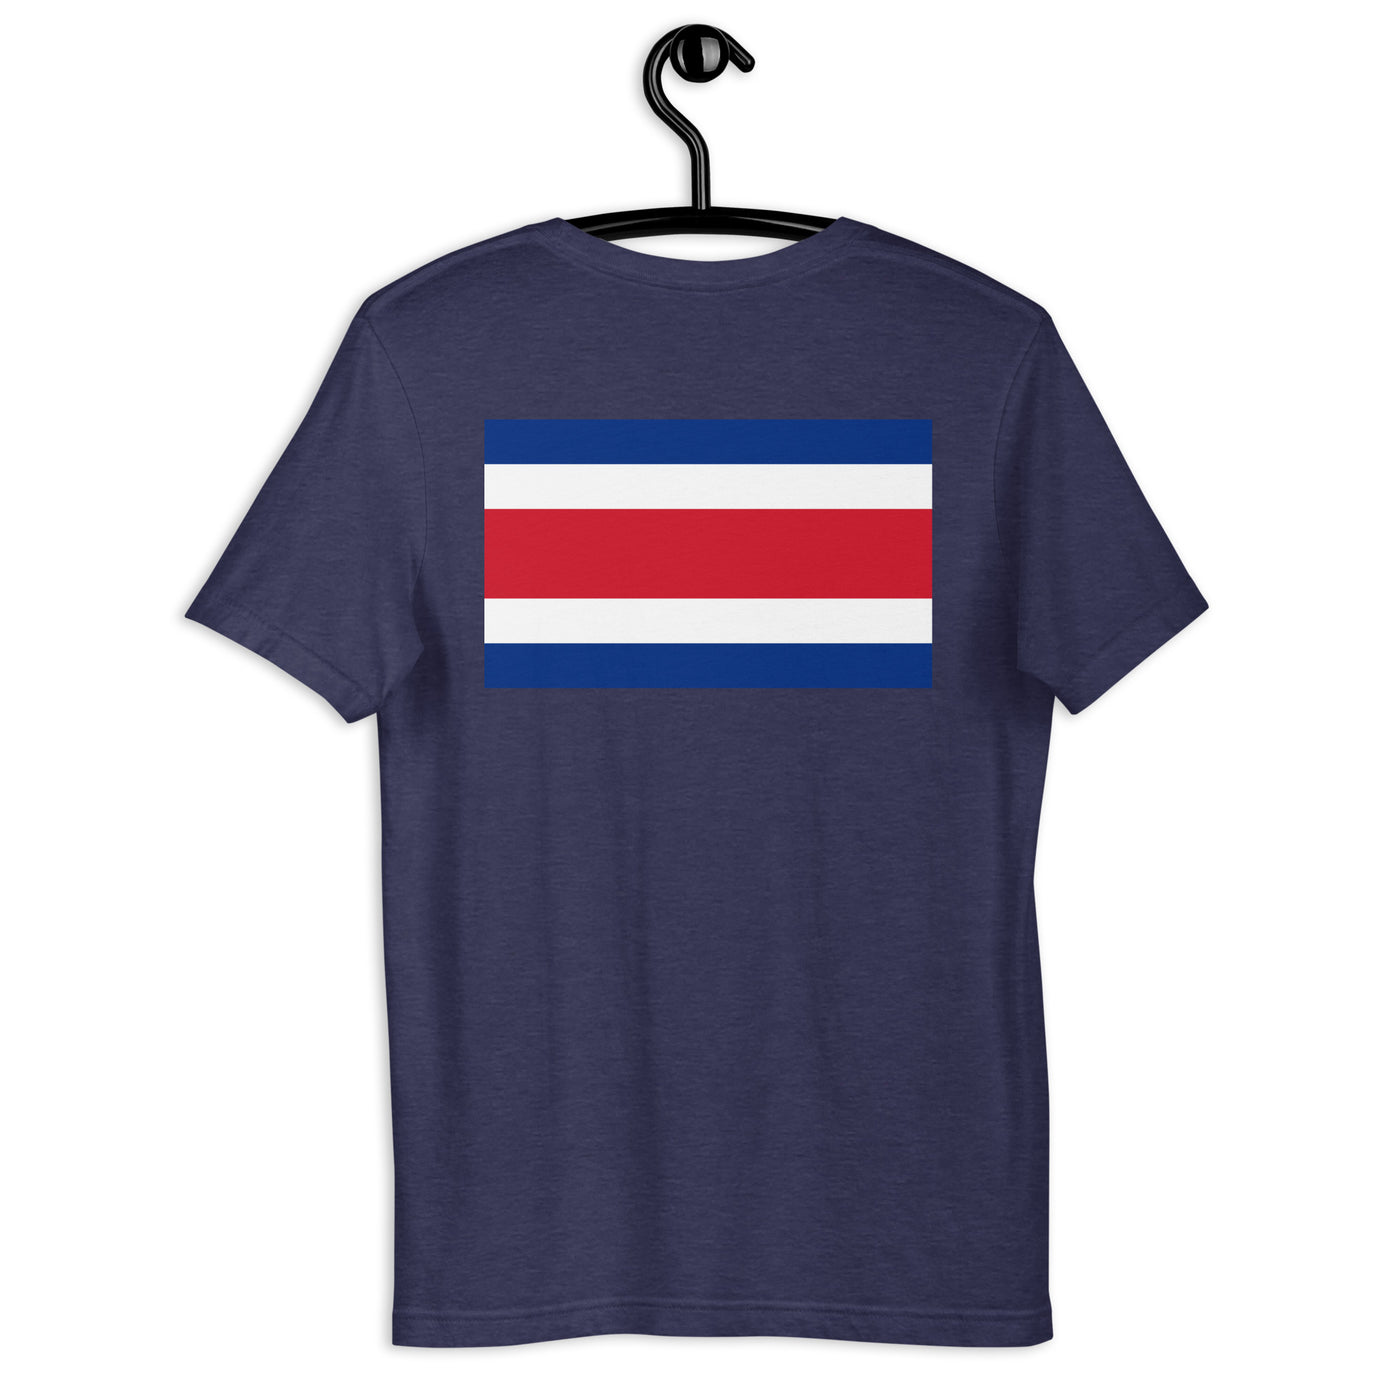 Costa Rica POR VIDA Futbol Unisex t-shirt